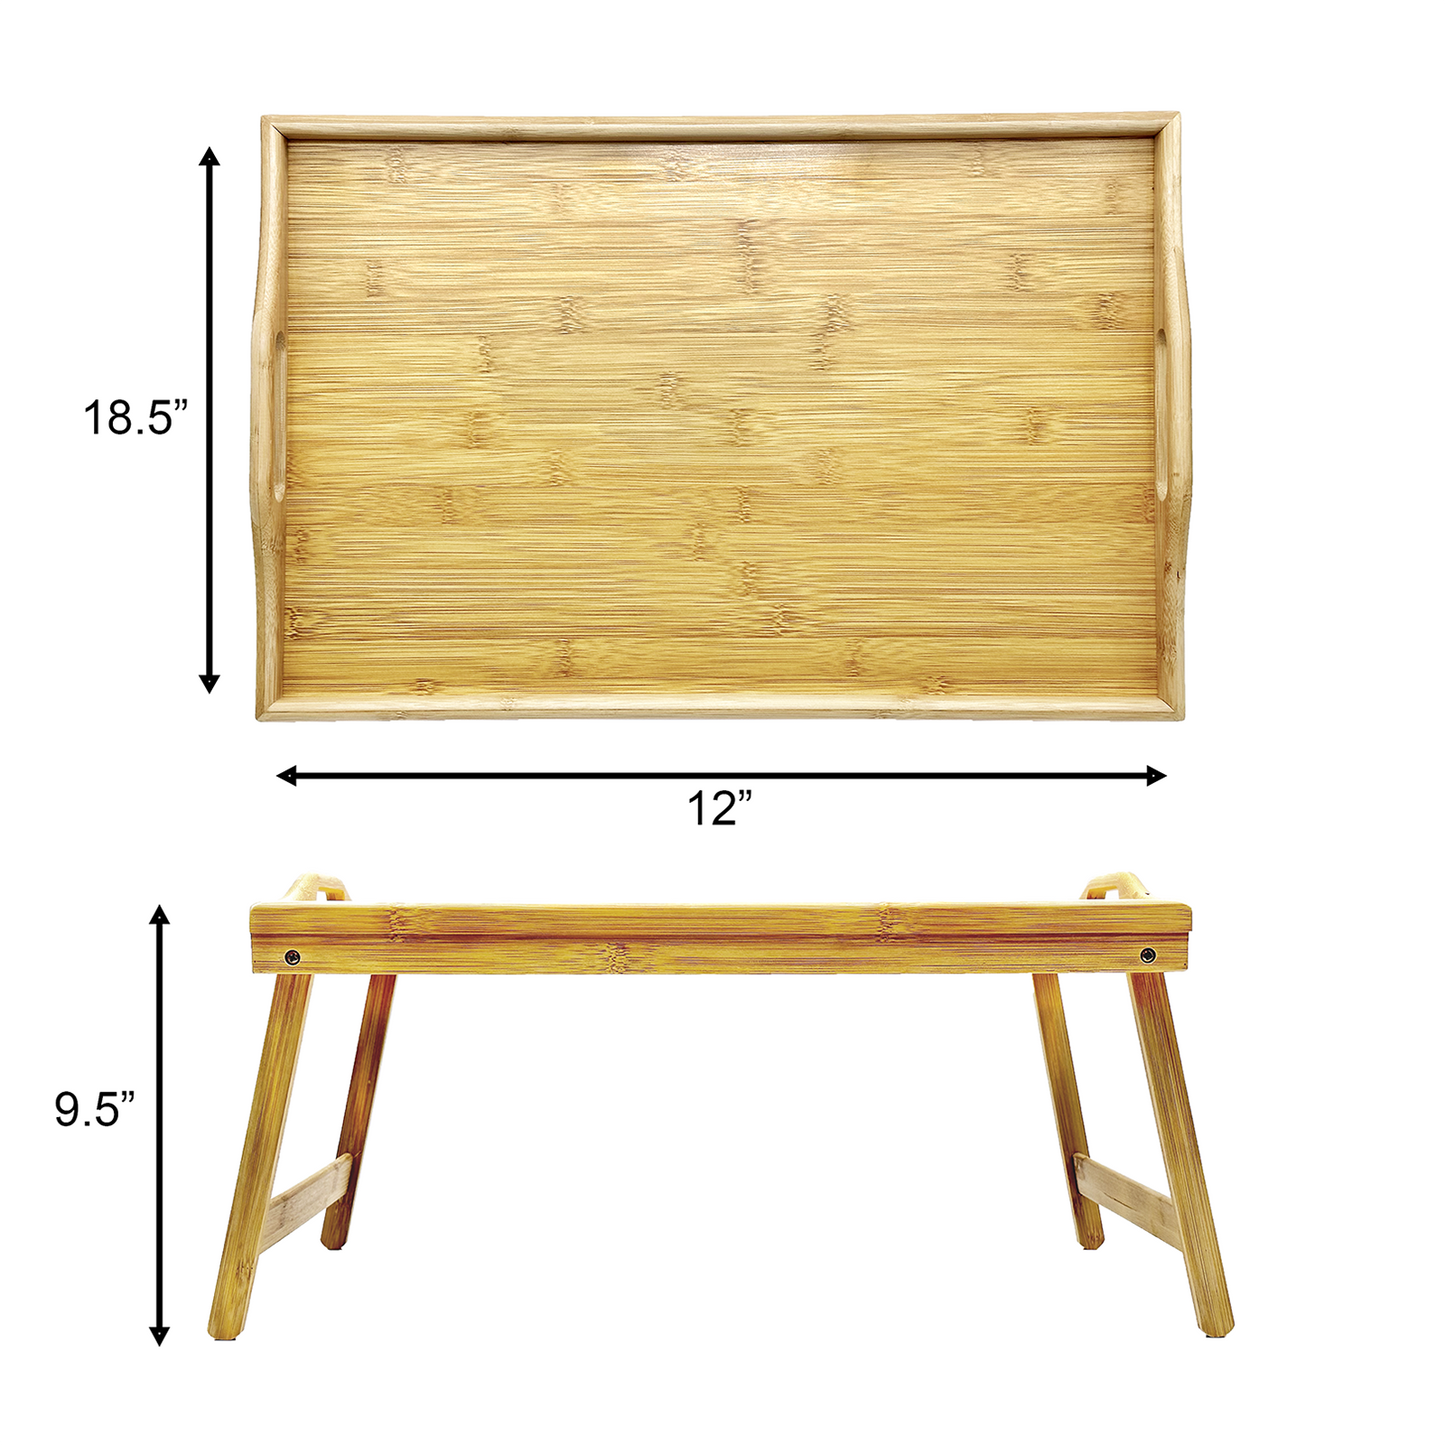 18.5" x 12" Bam & Boo Natural Bamboo Folding Tray Table